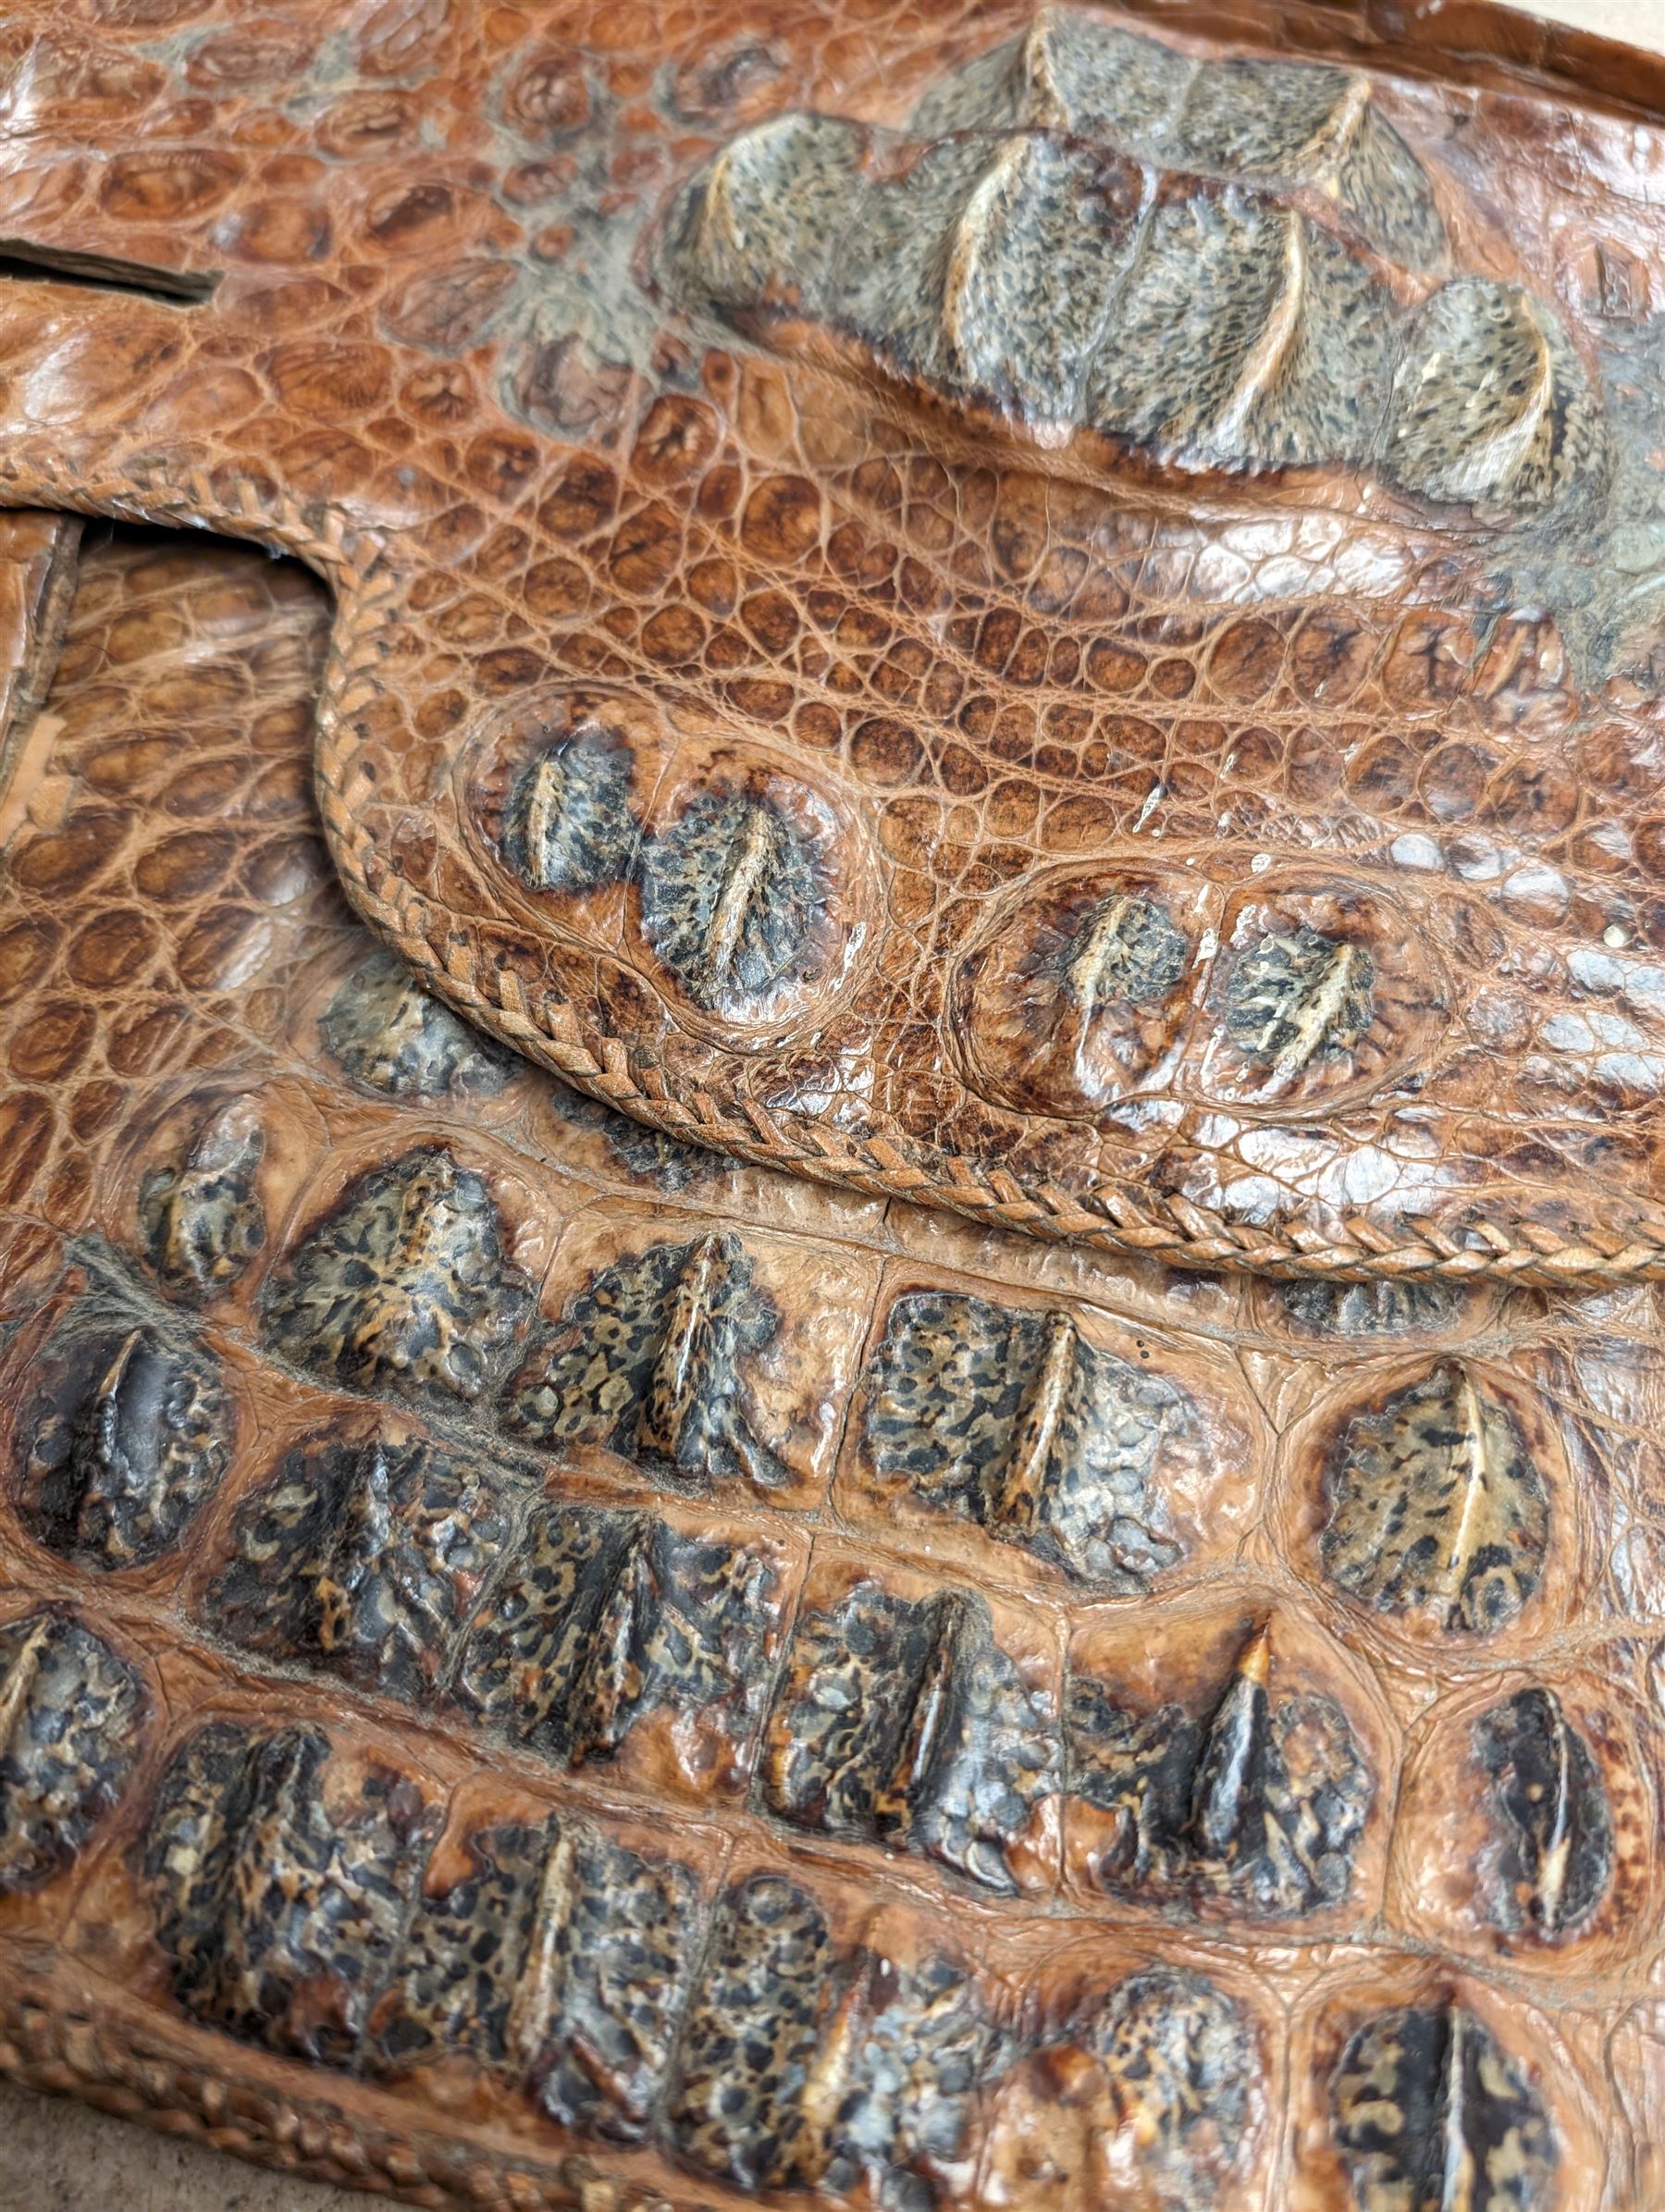 Crocodile skin handbag and lizard skin purse - Image 2 of 2